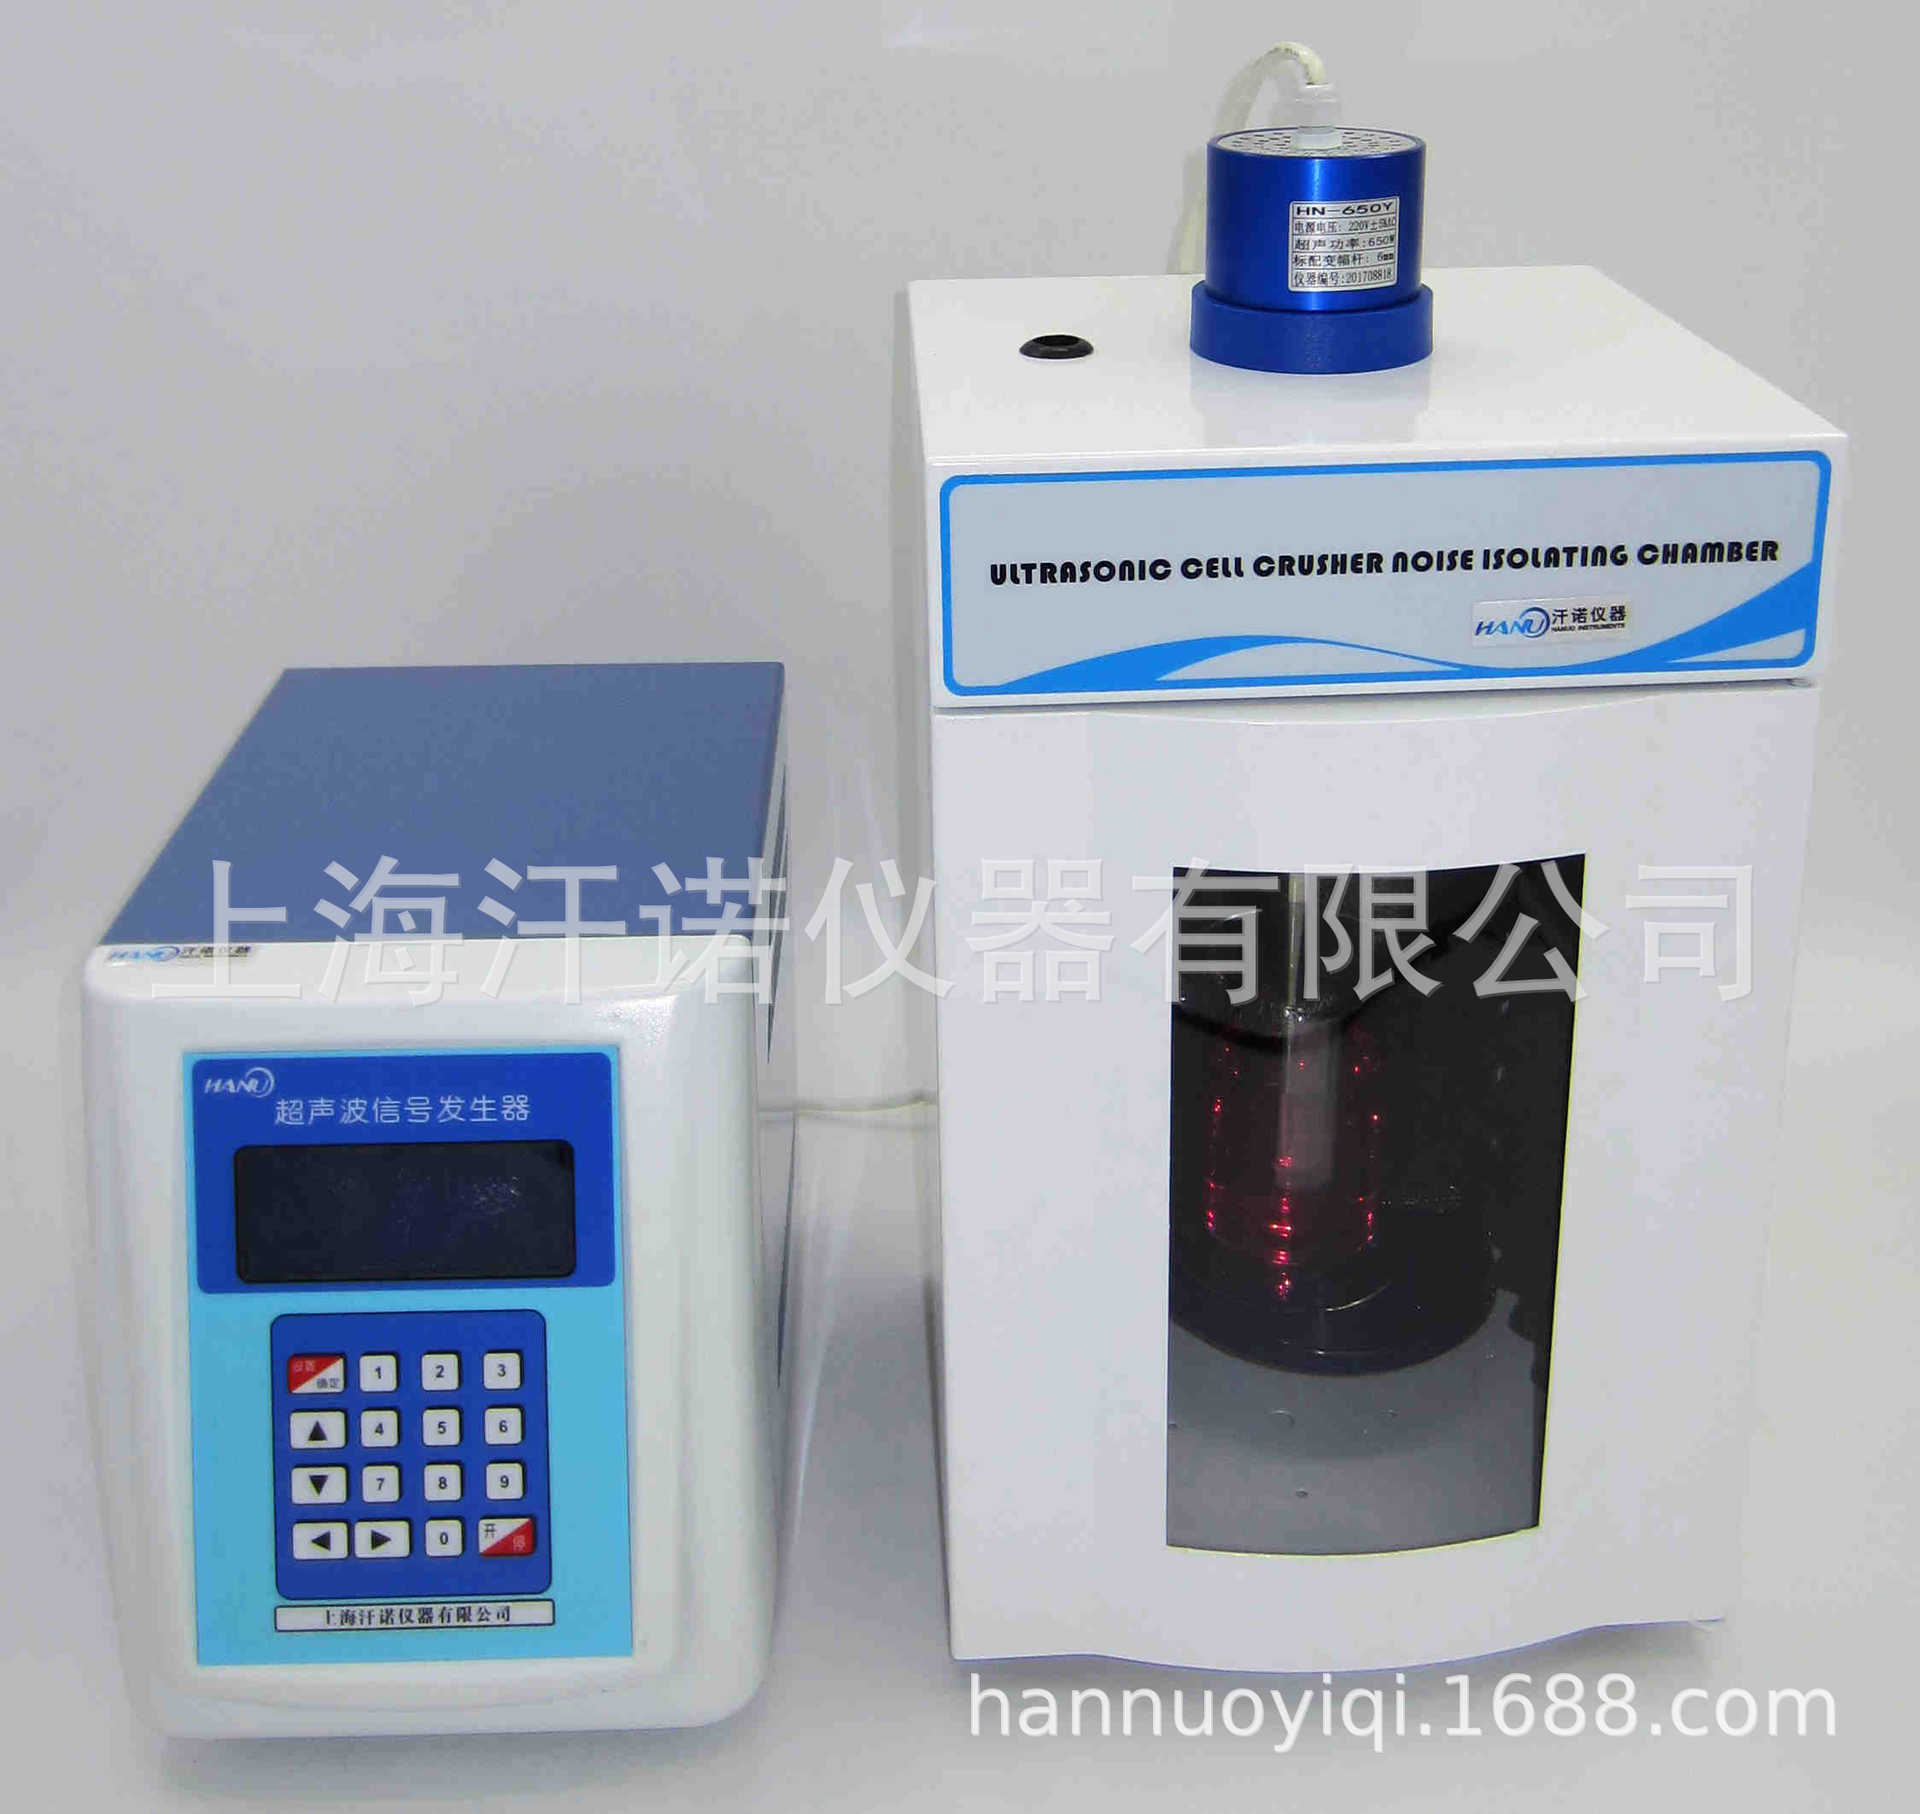 Shanghai New generation LCD Screen Ultrasonic wave processor Ultrasonic wave Disperser Emulsification Cell grinder